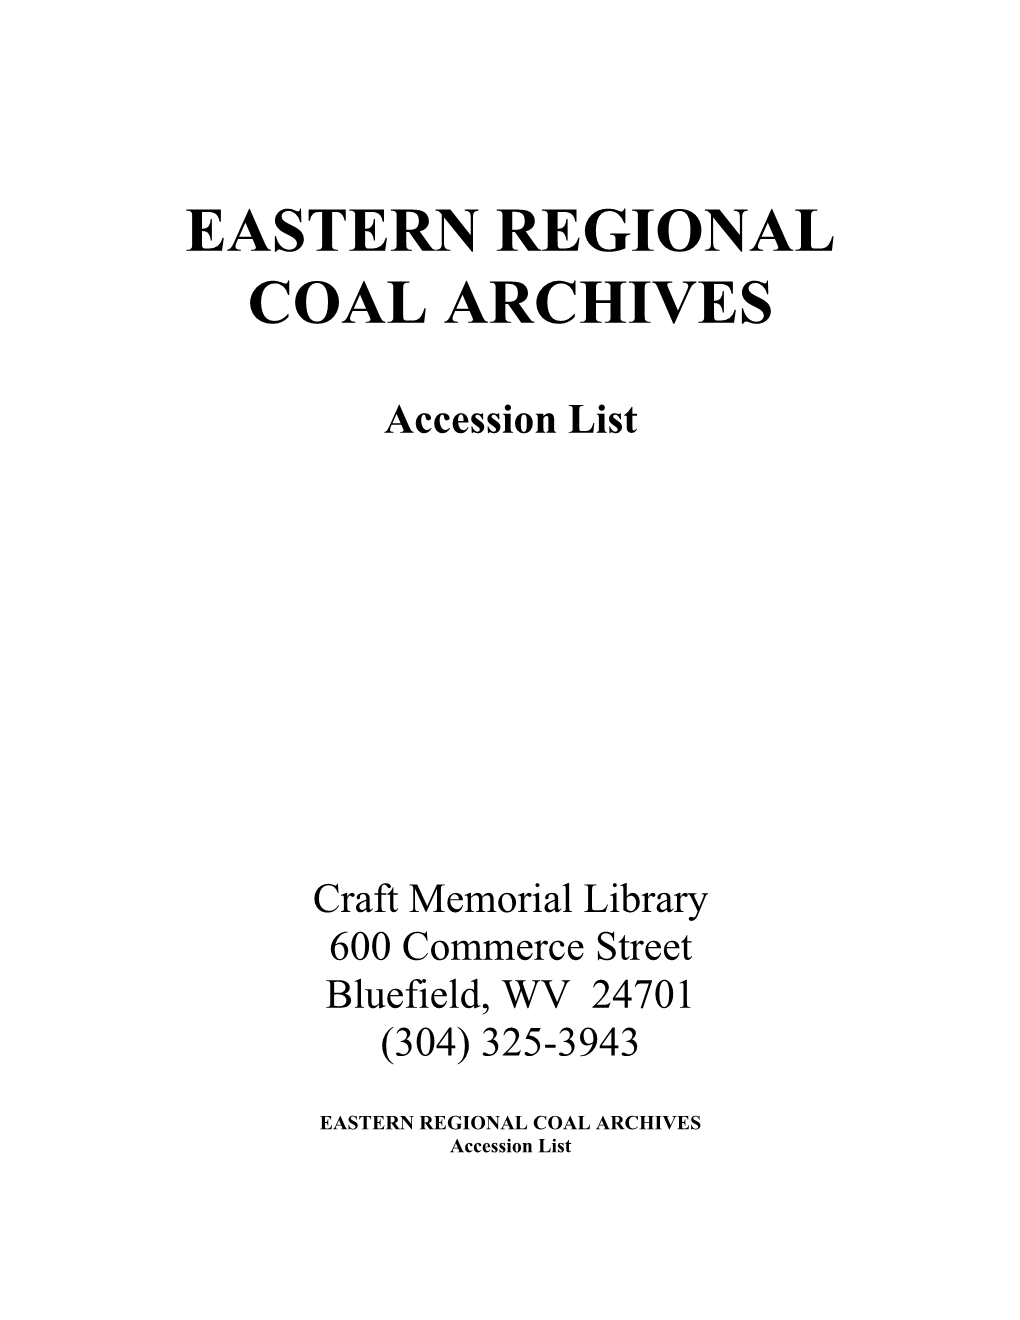 Eastern Regional Coal Archives